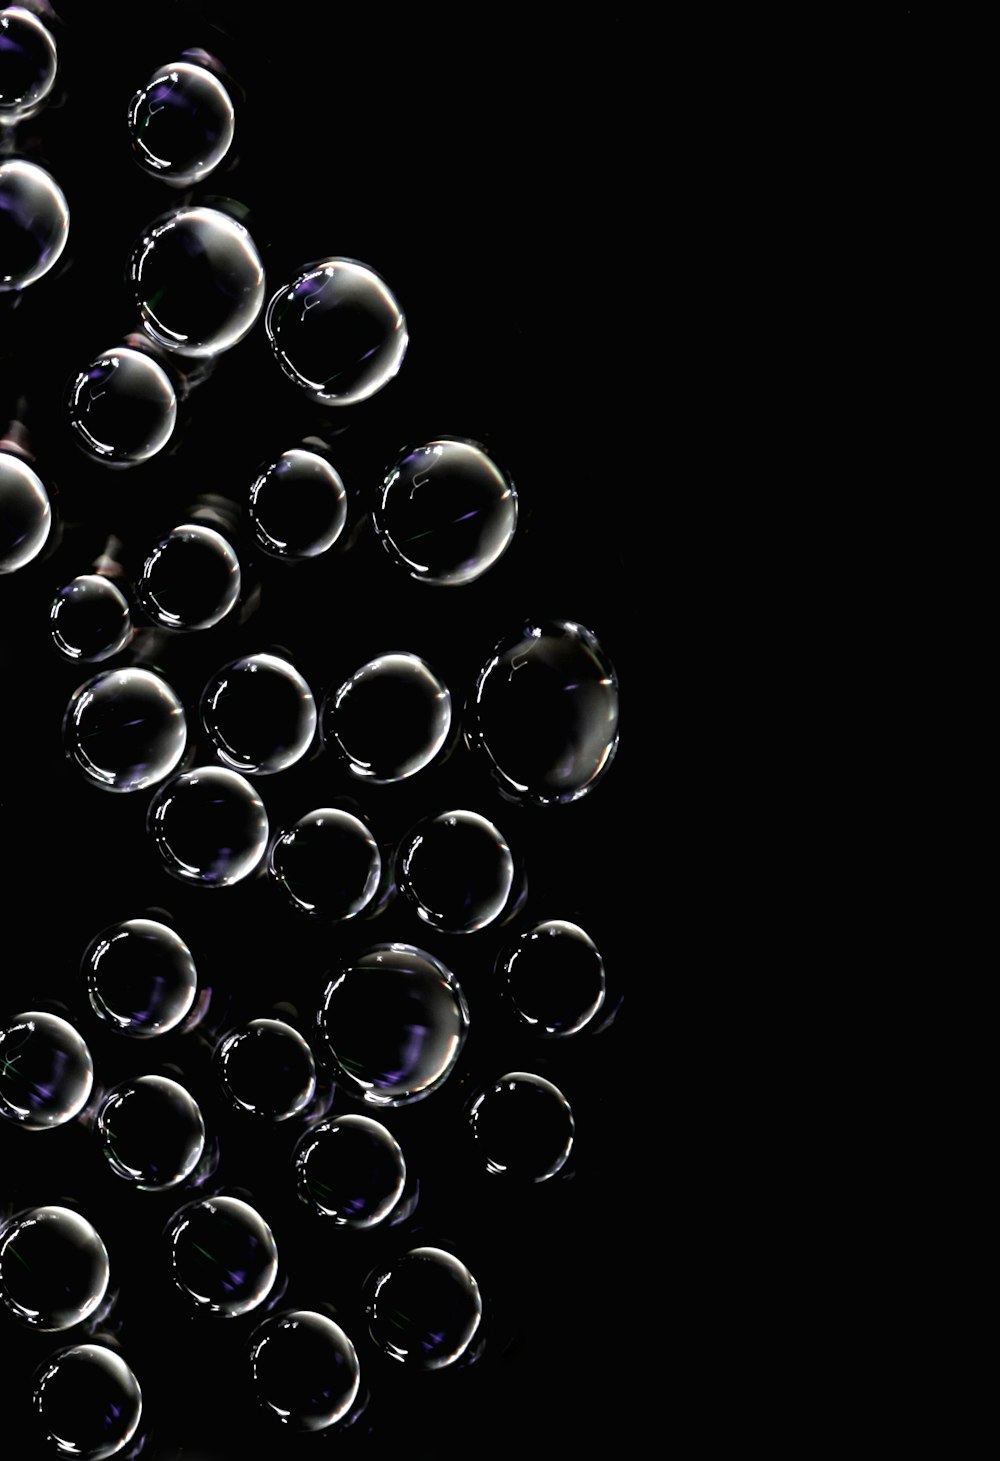 black and white bubbles wallpaper photo – Free Bubble Image on Unsplash